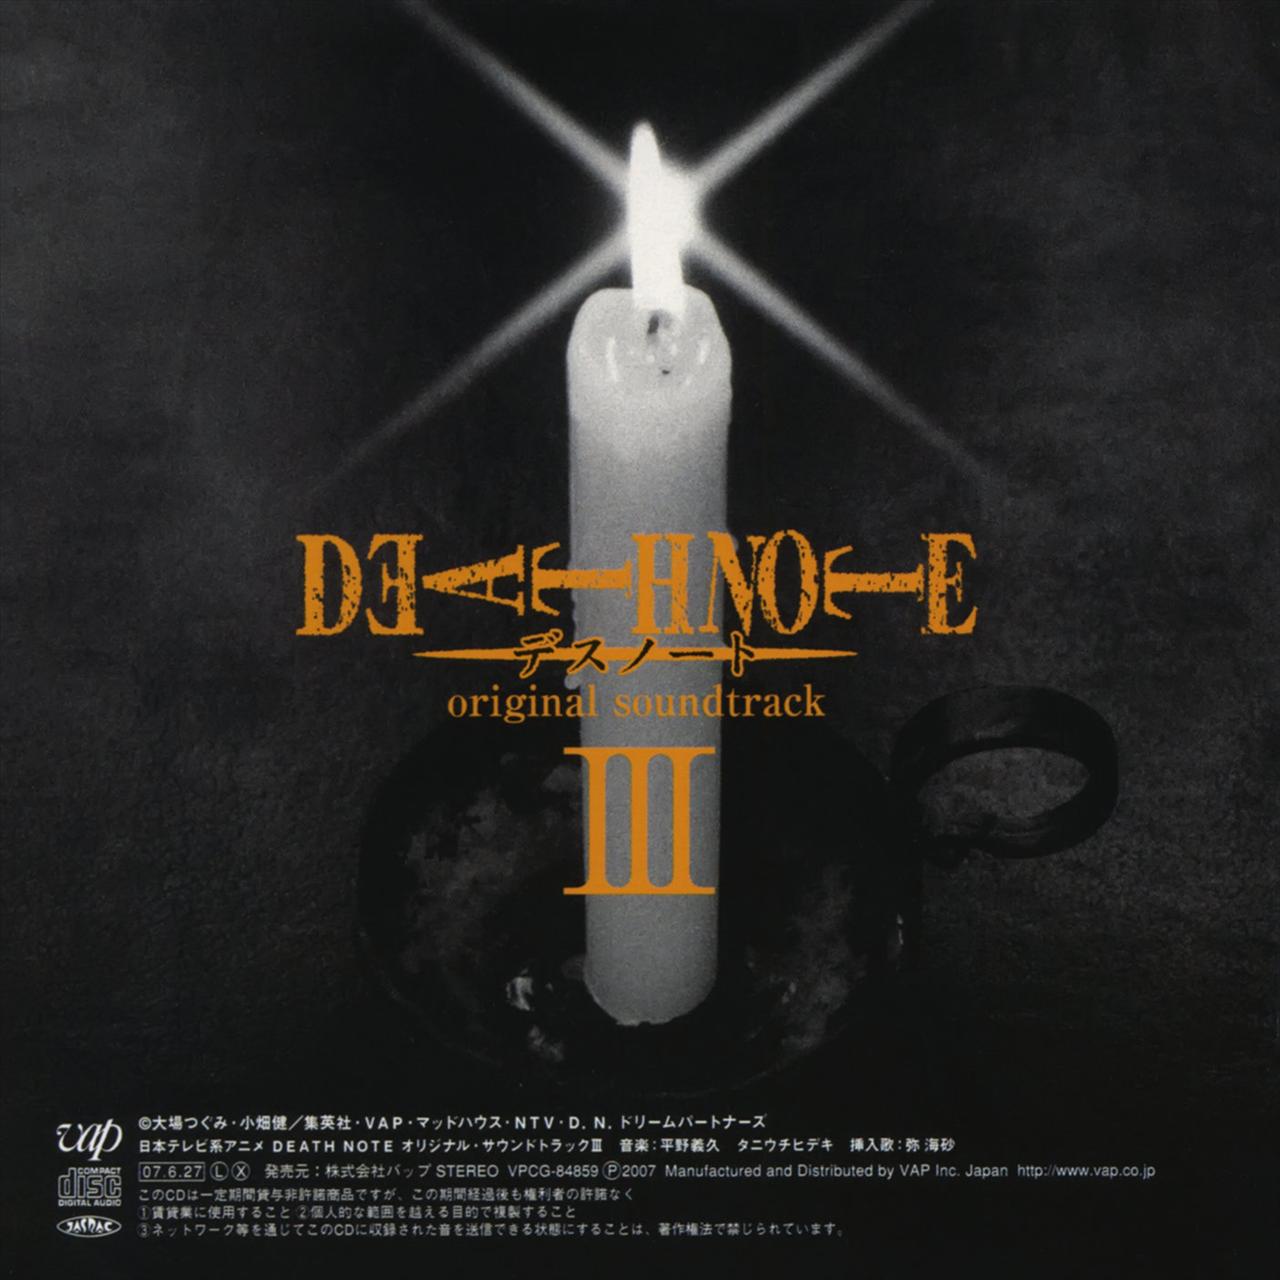 DEATH NOTE - Original Soundtrack III - Booklet 01.jpg